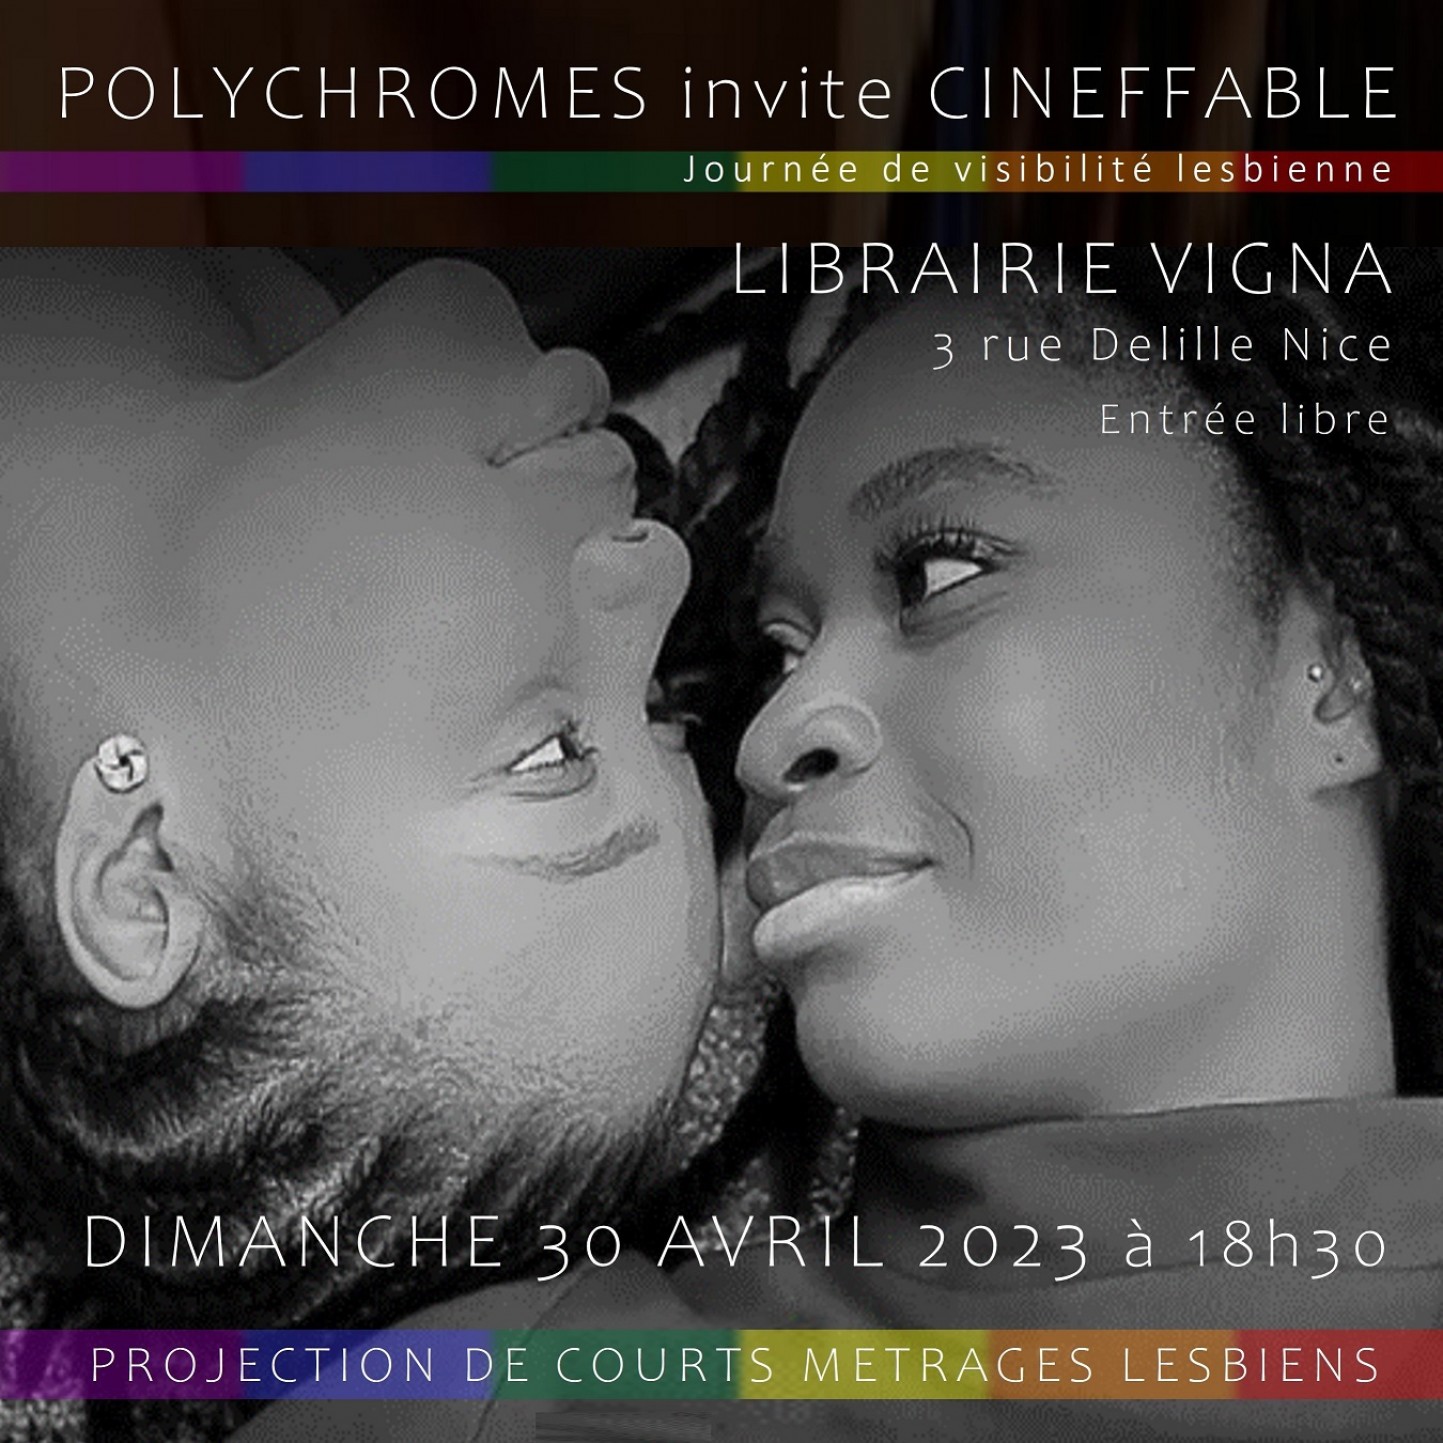 Polychromes invite Cineffable